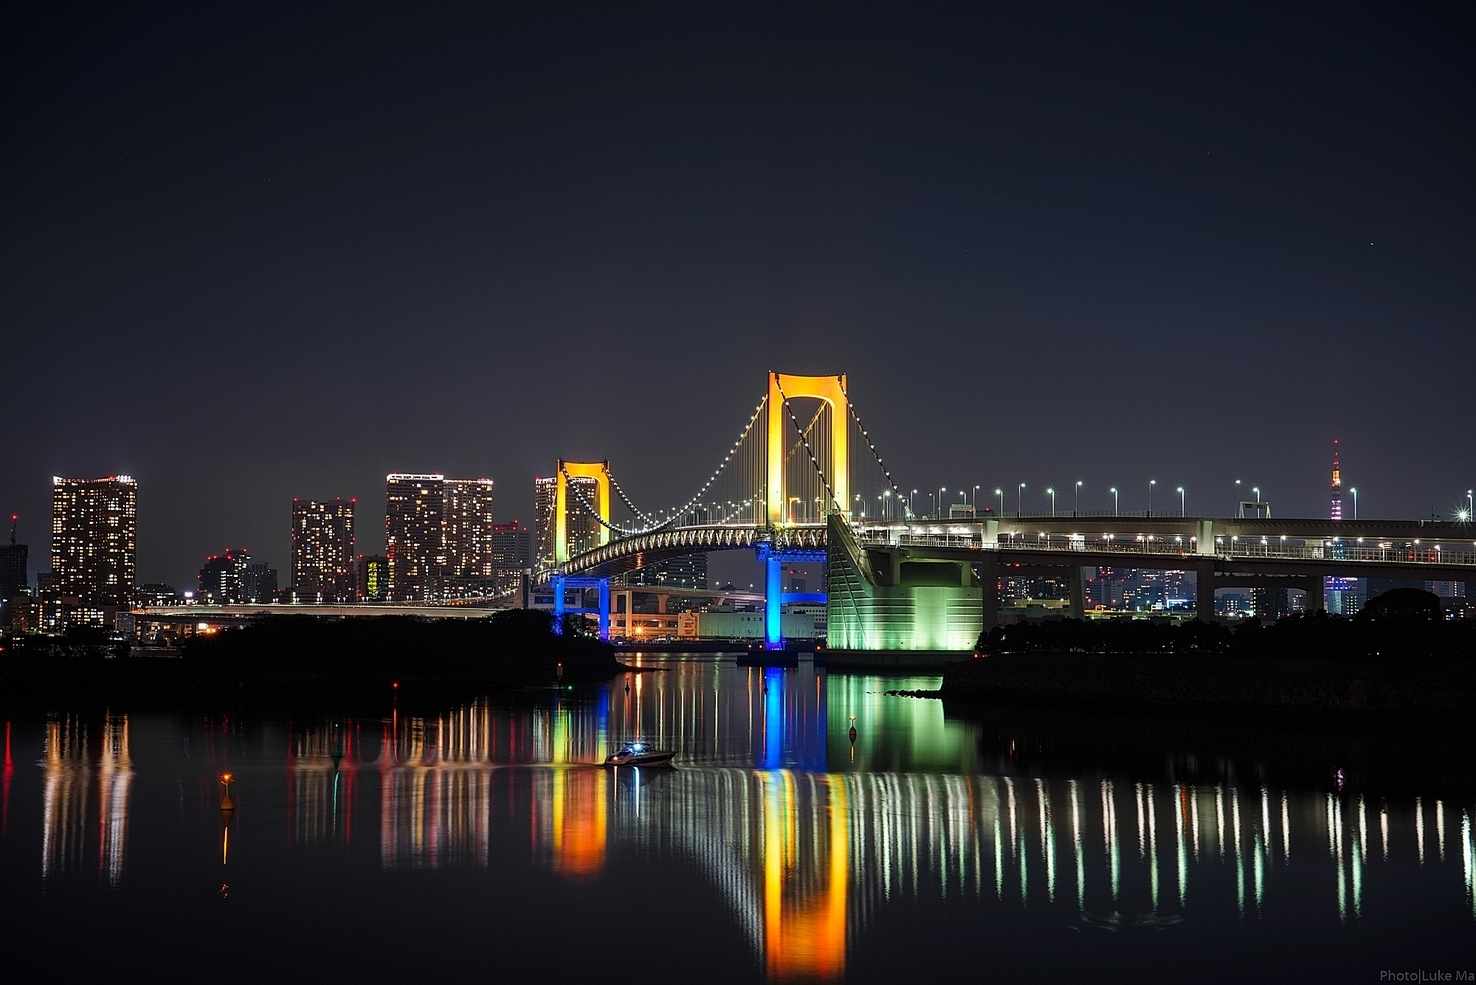 Large rainbow bridge  odaiba  tokyo